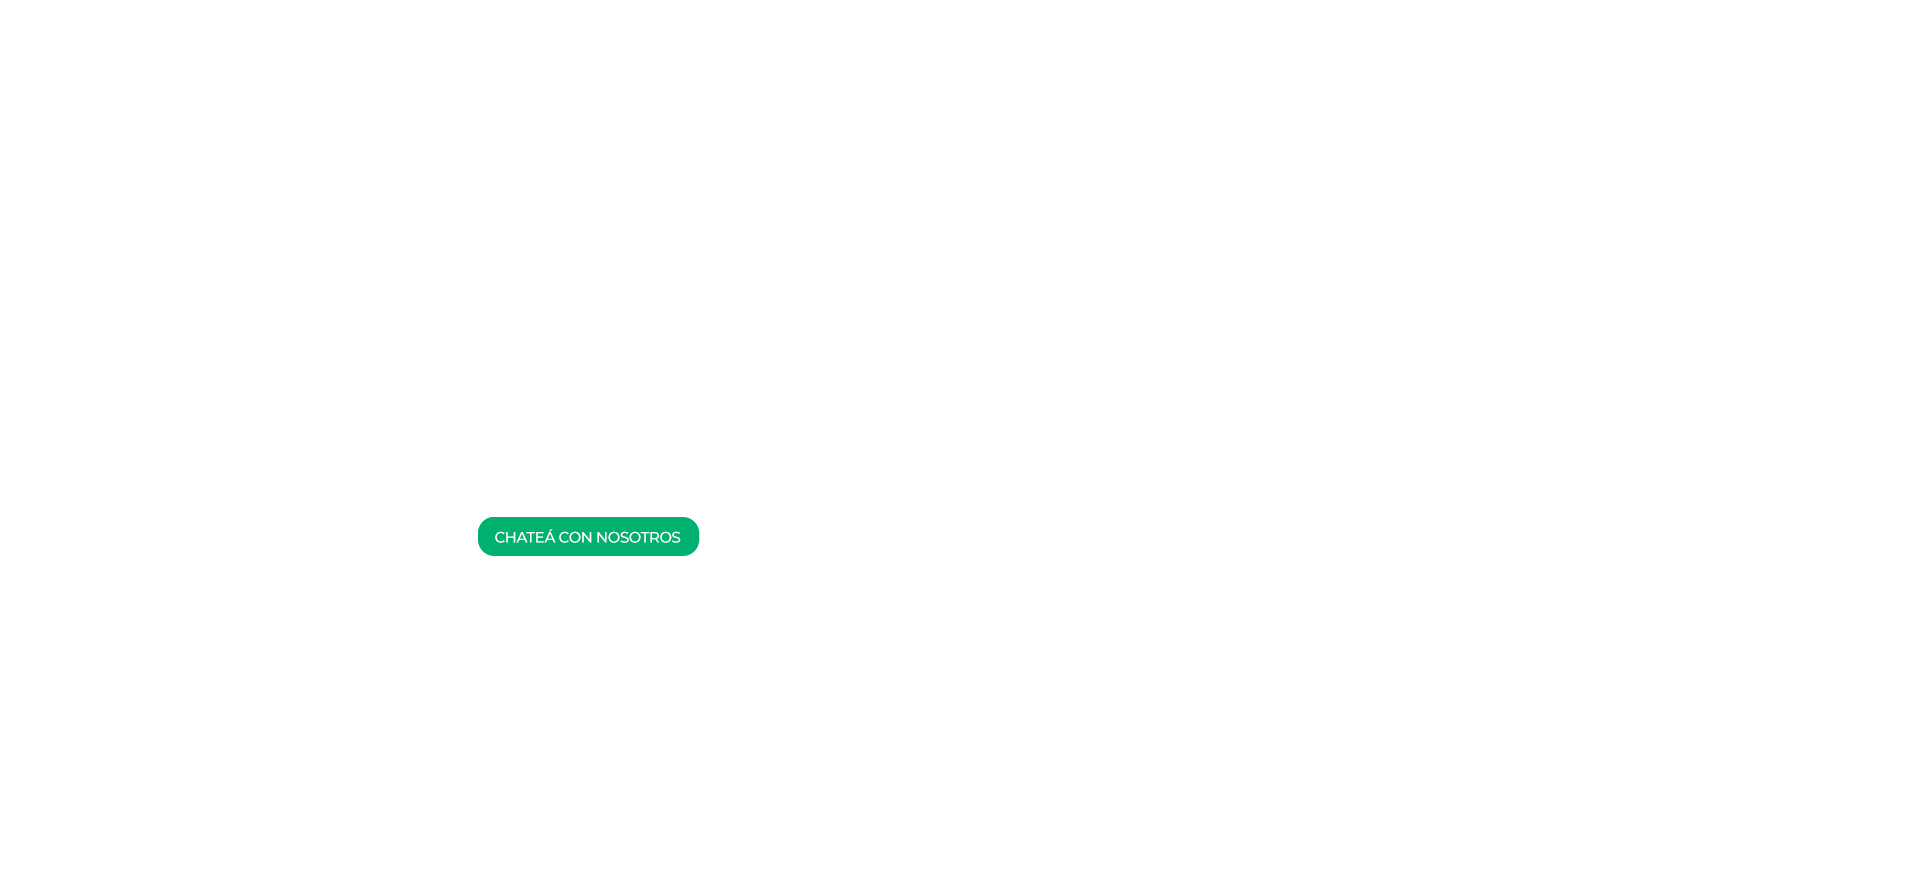 05-web-slider-whatsapp-TXT-new.png